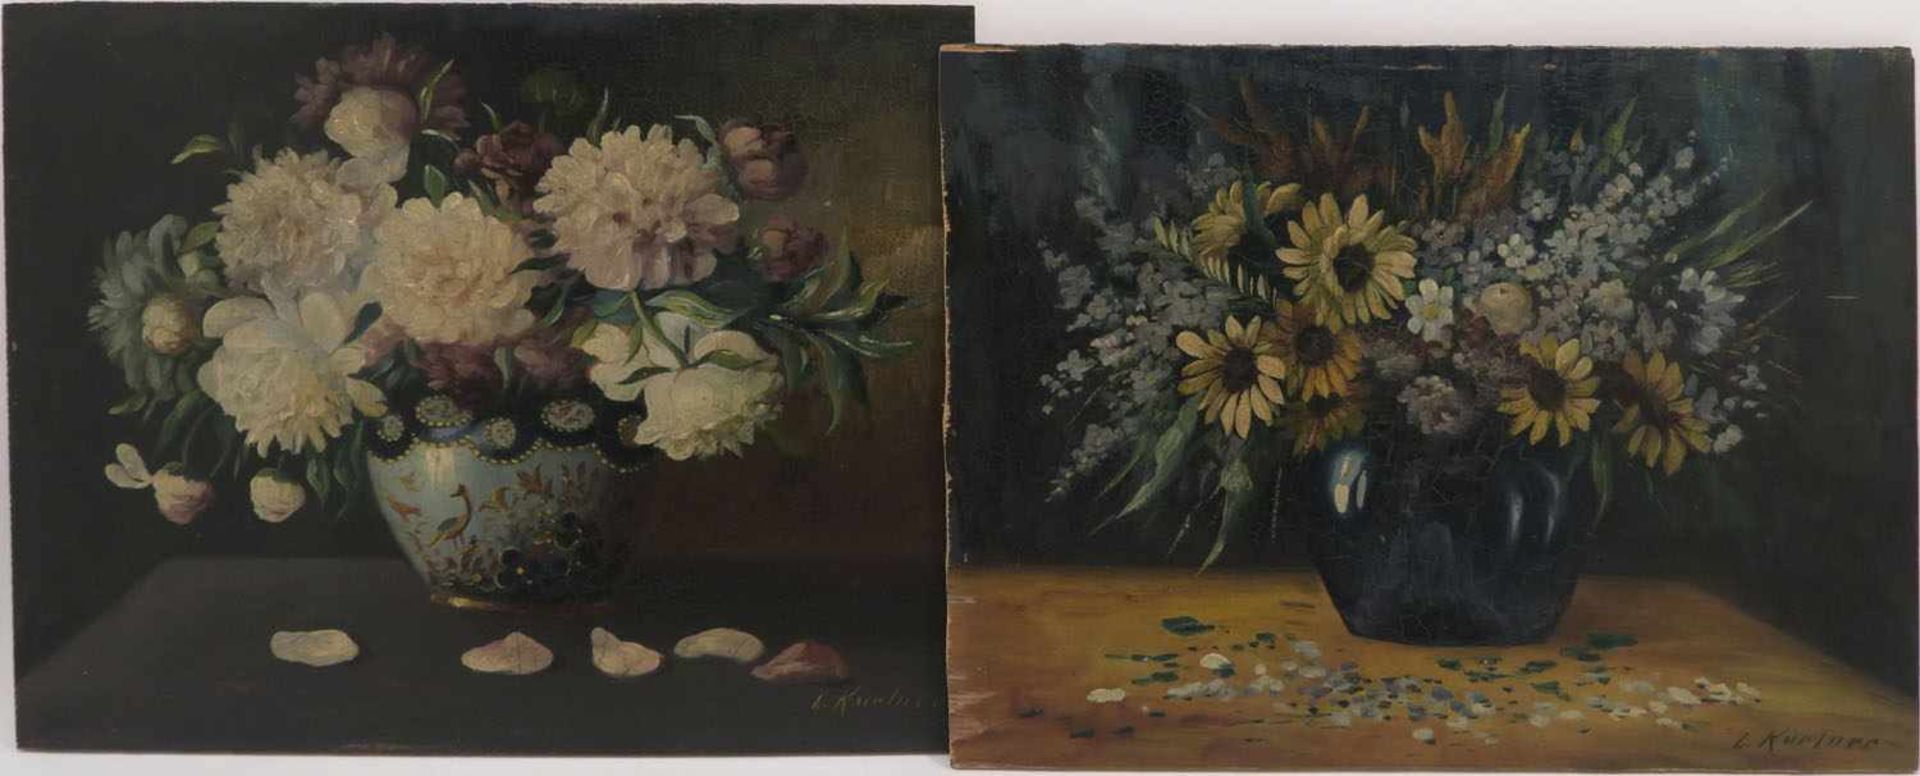 Kurtner, L.19./20. Jh.BlumenstilllebenZwei Gemälde. Öl/Holz. 29 x 38 cm bzw. 30 x 38 cm. R. u.